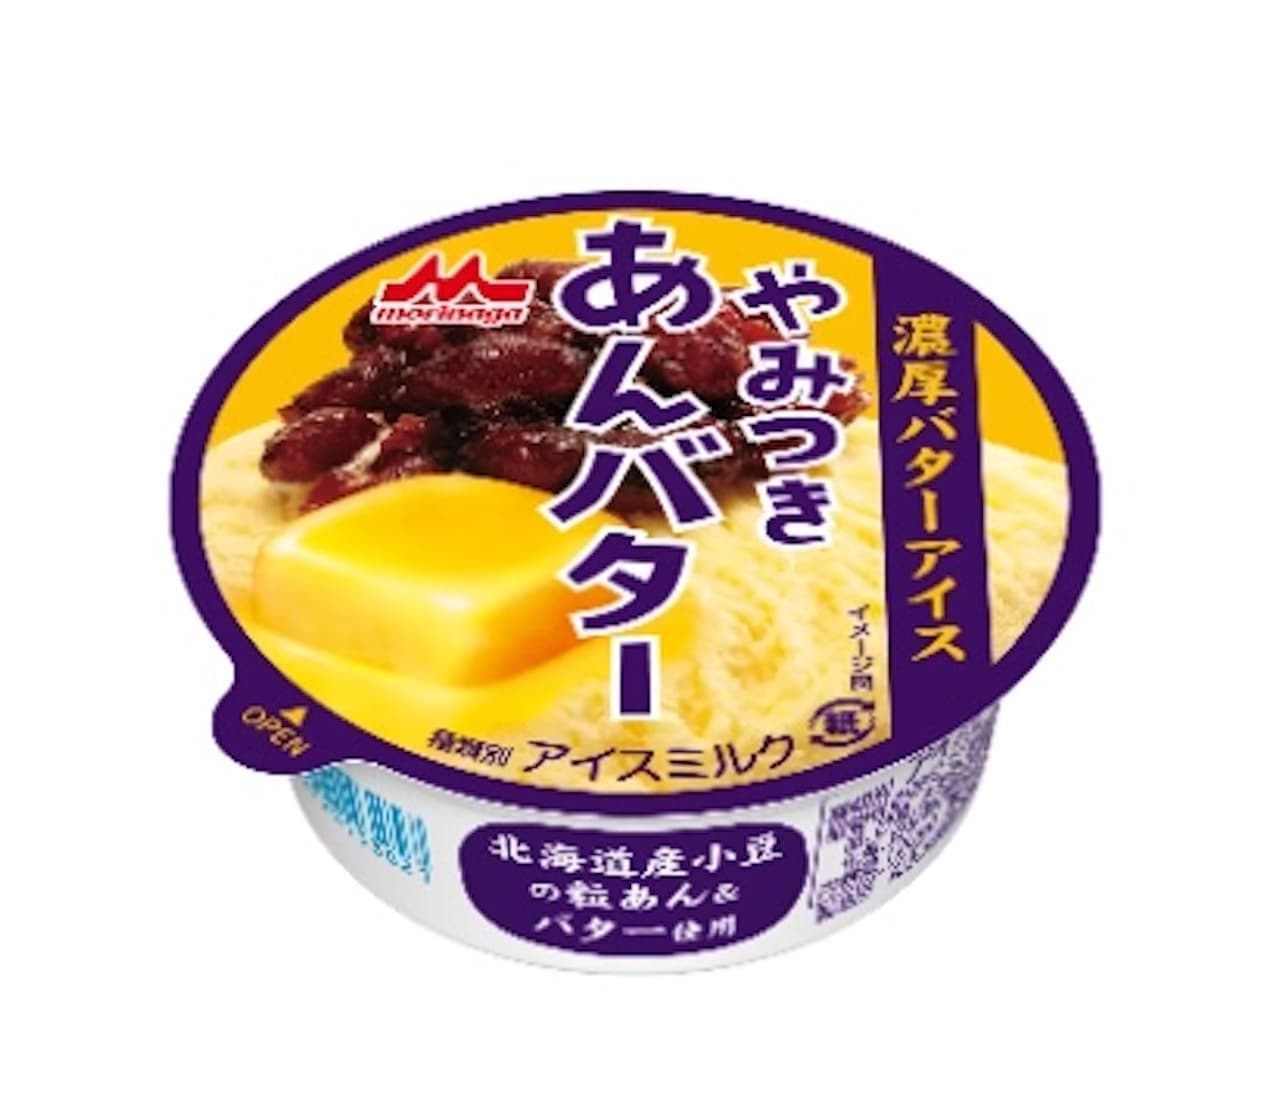 YAMITSURI An Butter" from Morinaga Milk Industry Co.